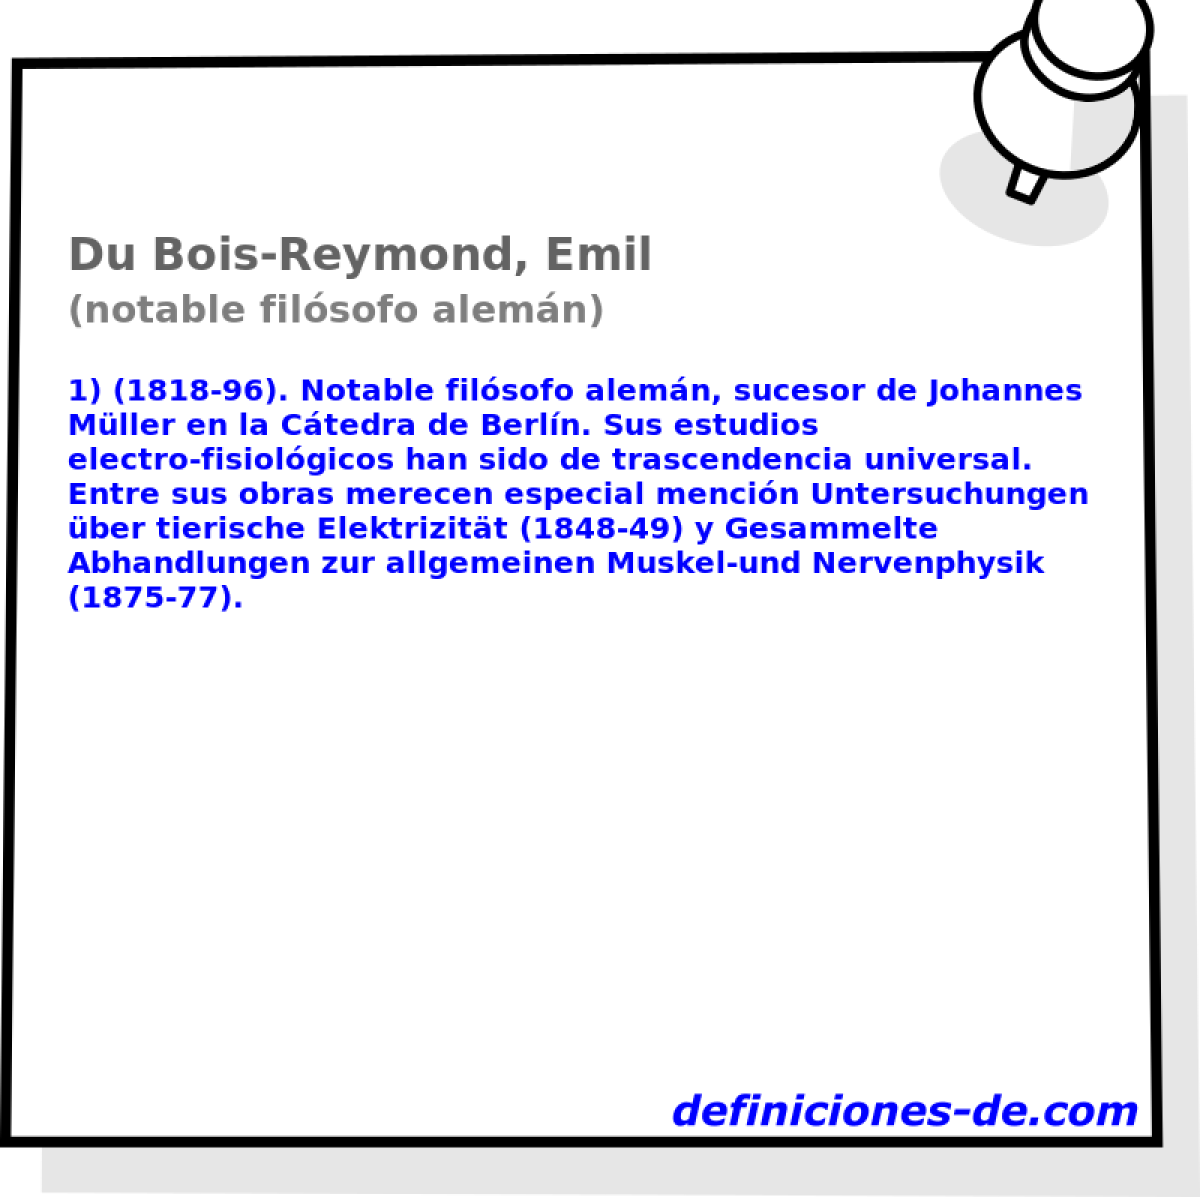 Du Bois-Reymond, Emil (notable filsofo alemn)